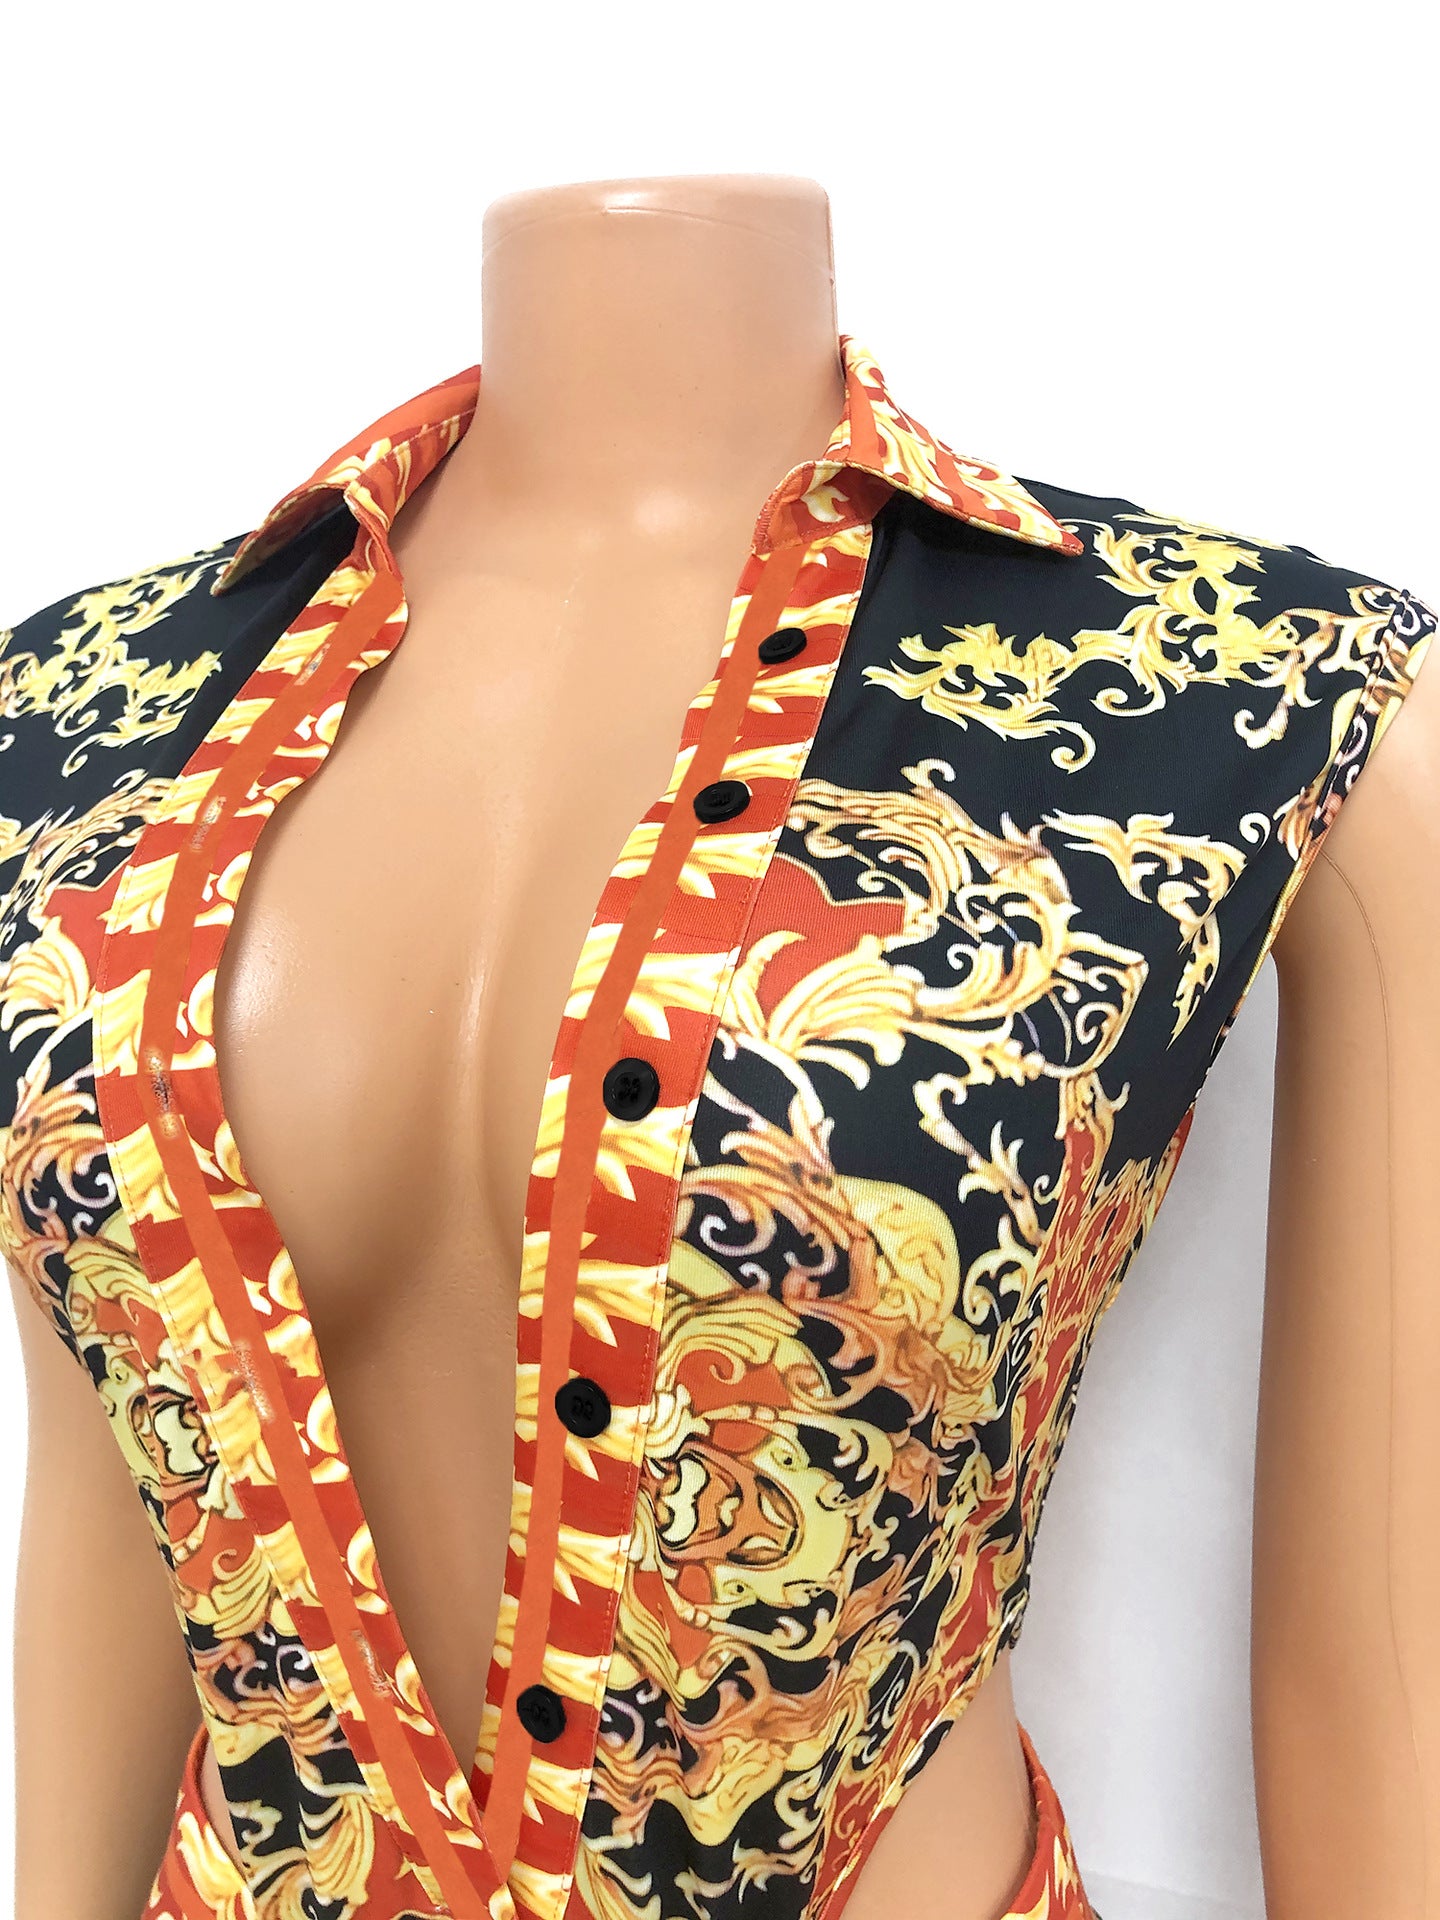 Jumpsuit  | Women's V-neck Digital Printed Two-piece Jumpsuit | [option1] |  [option2]| thecurvestory.myshopify.com